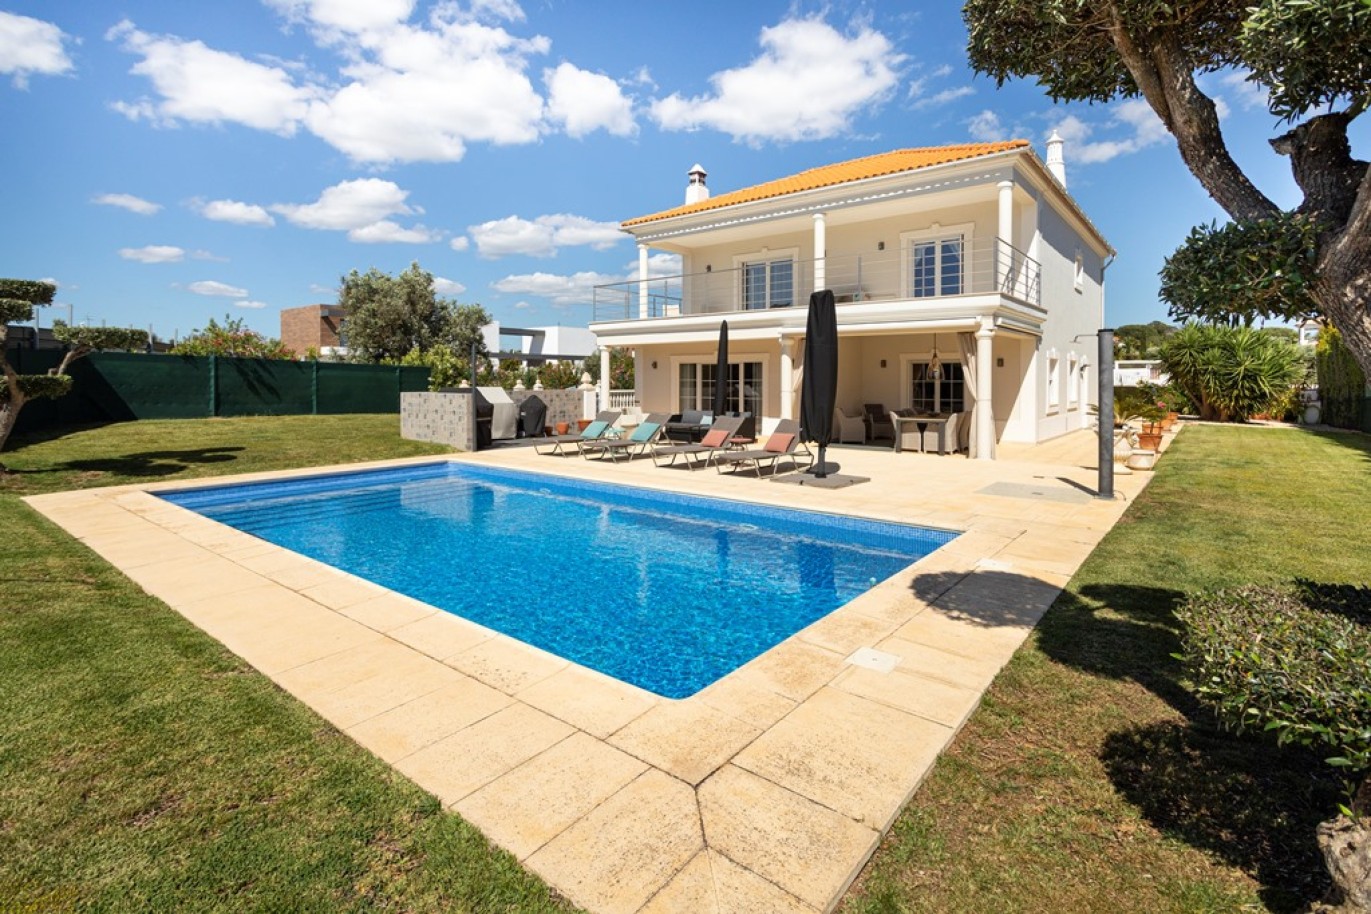 Moradia V5 com piscina, para venda em Vilamoura, Algarve_264472